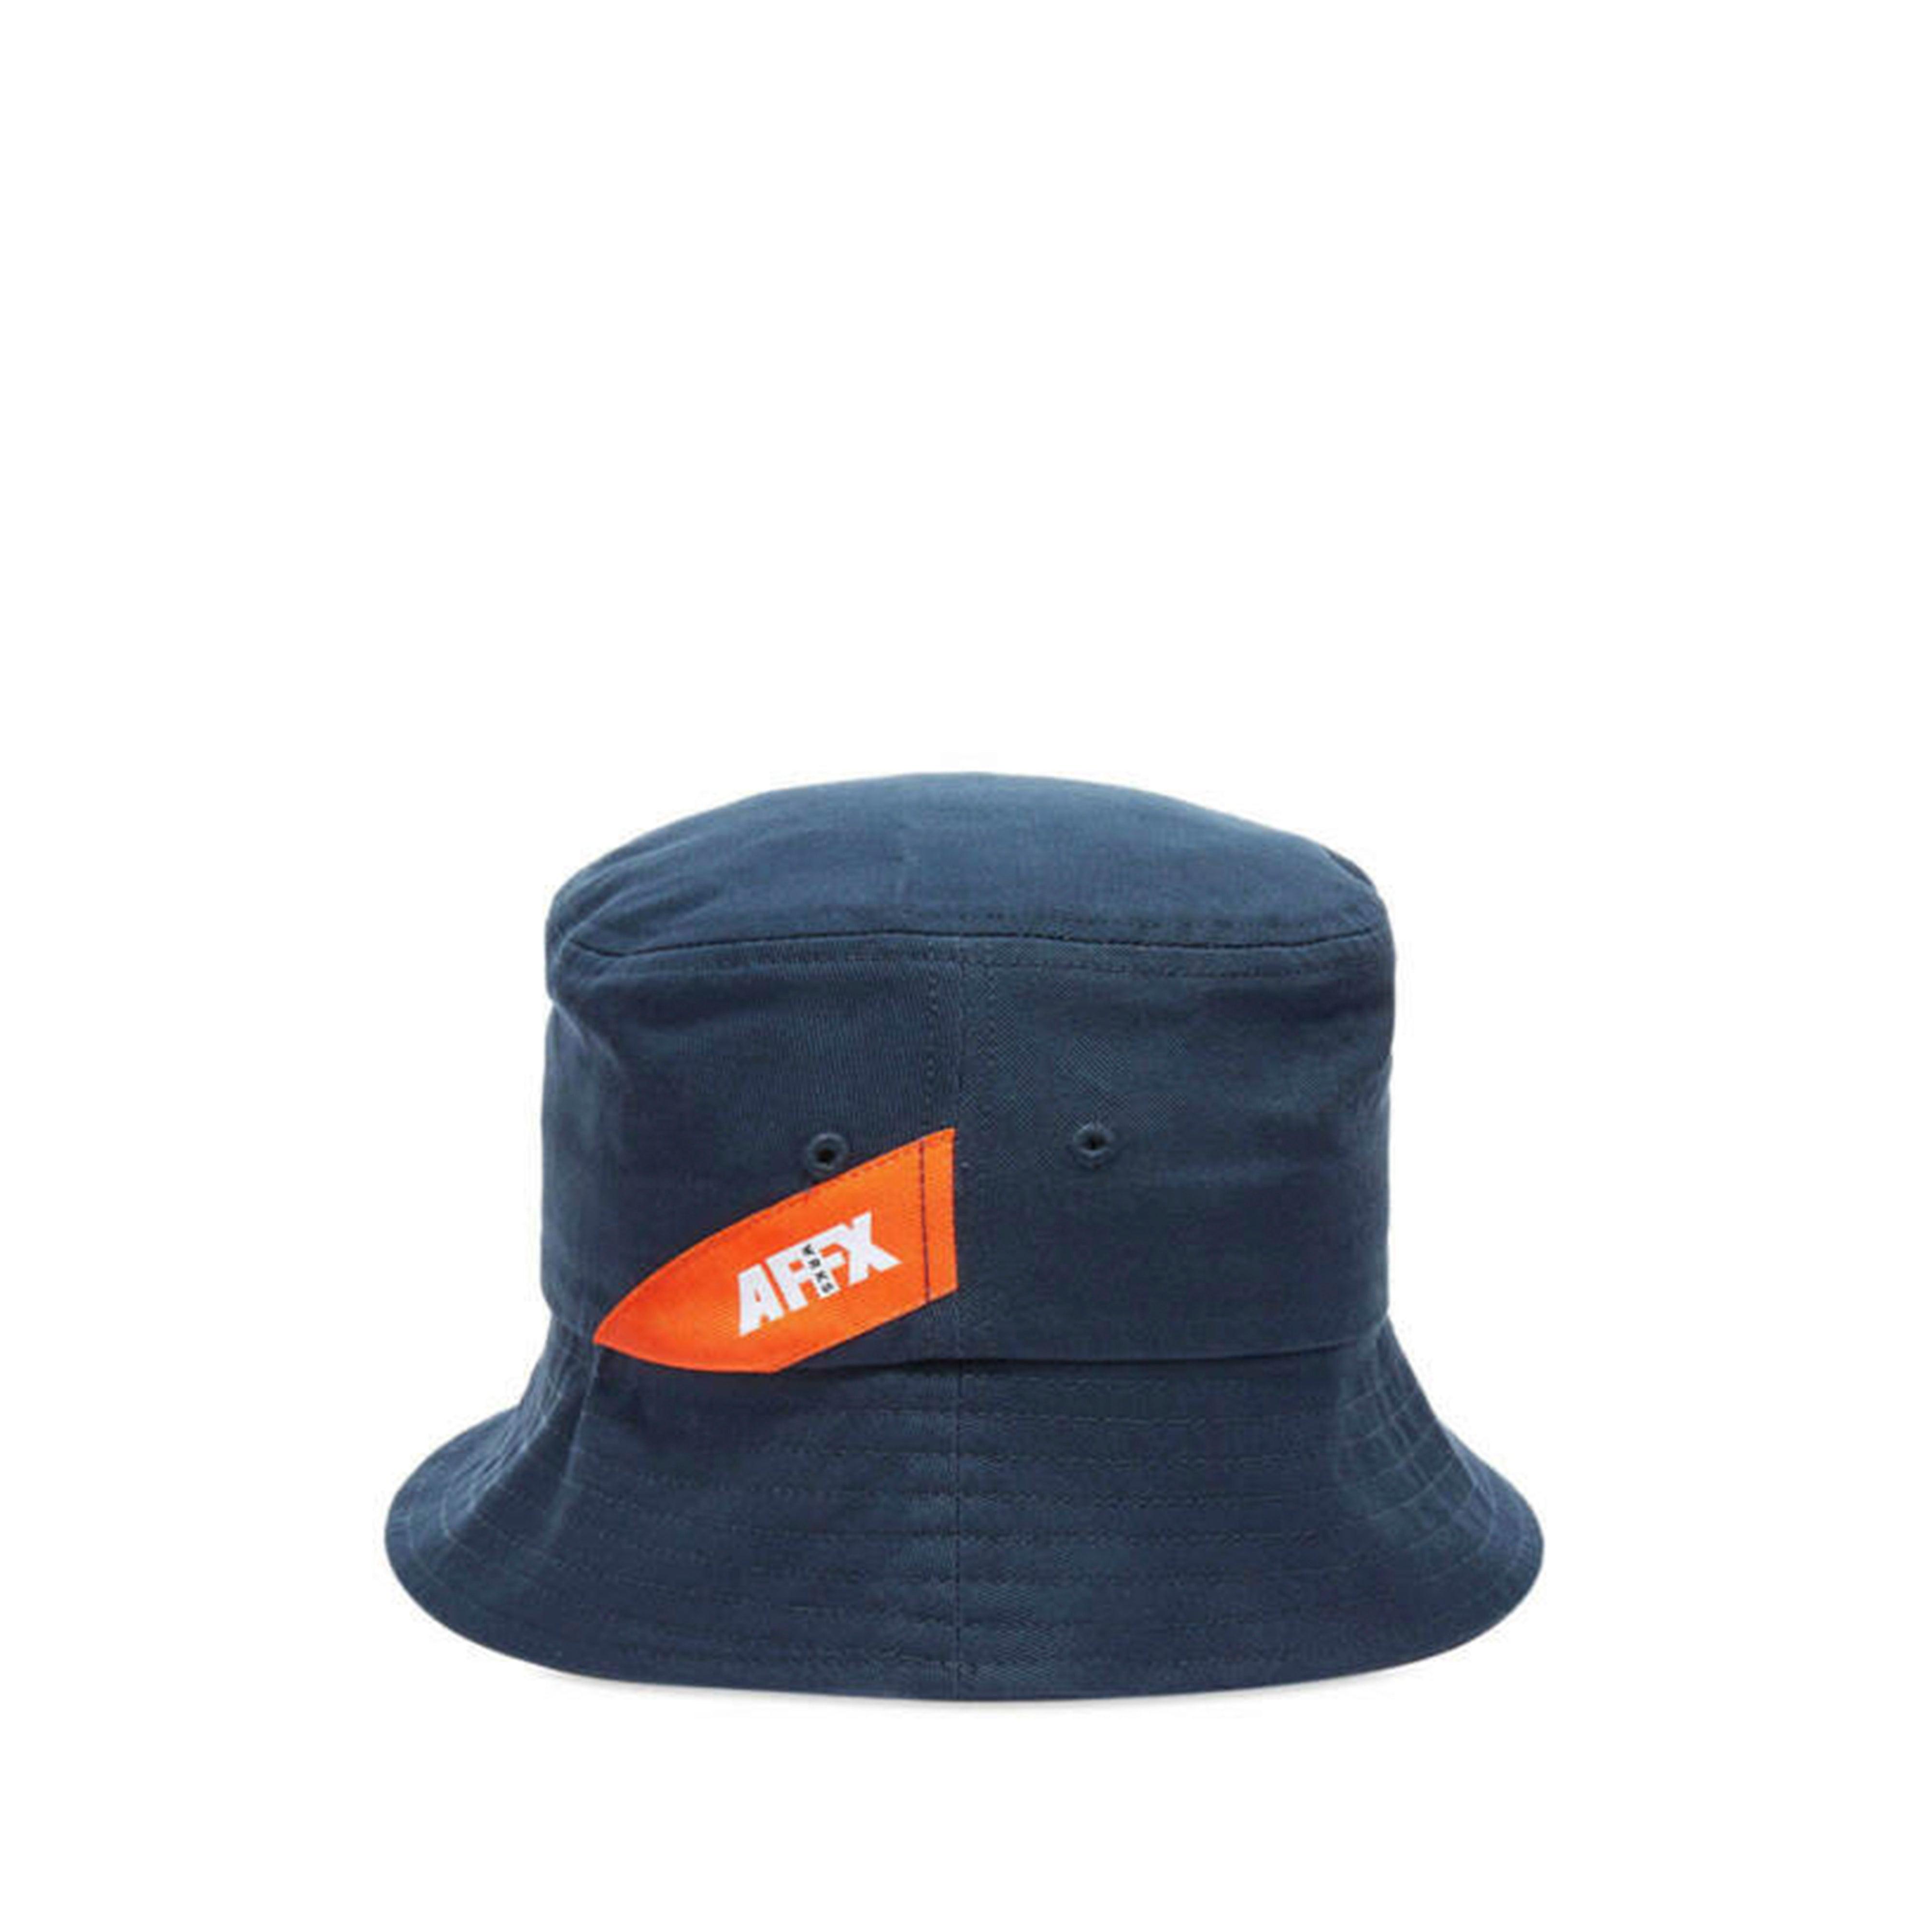 Affix Bucket Hat (Navy) by AFFIX